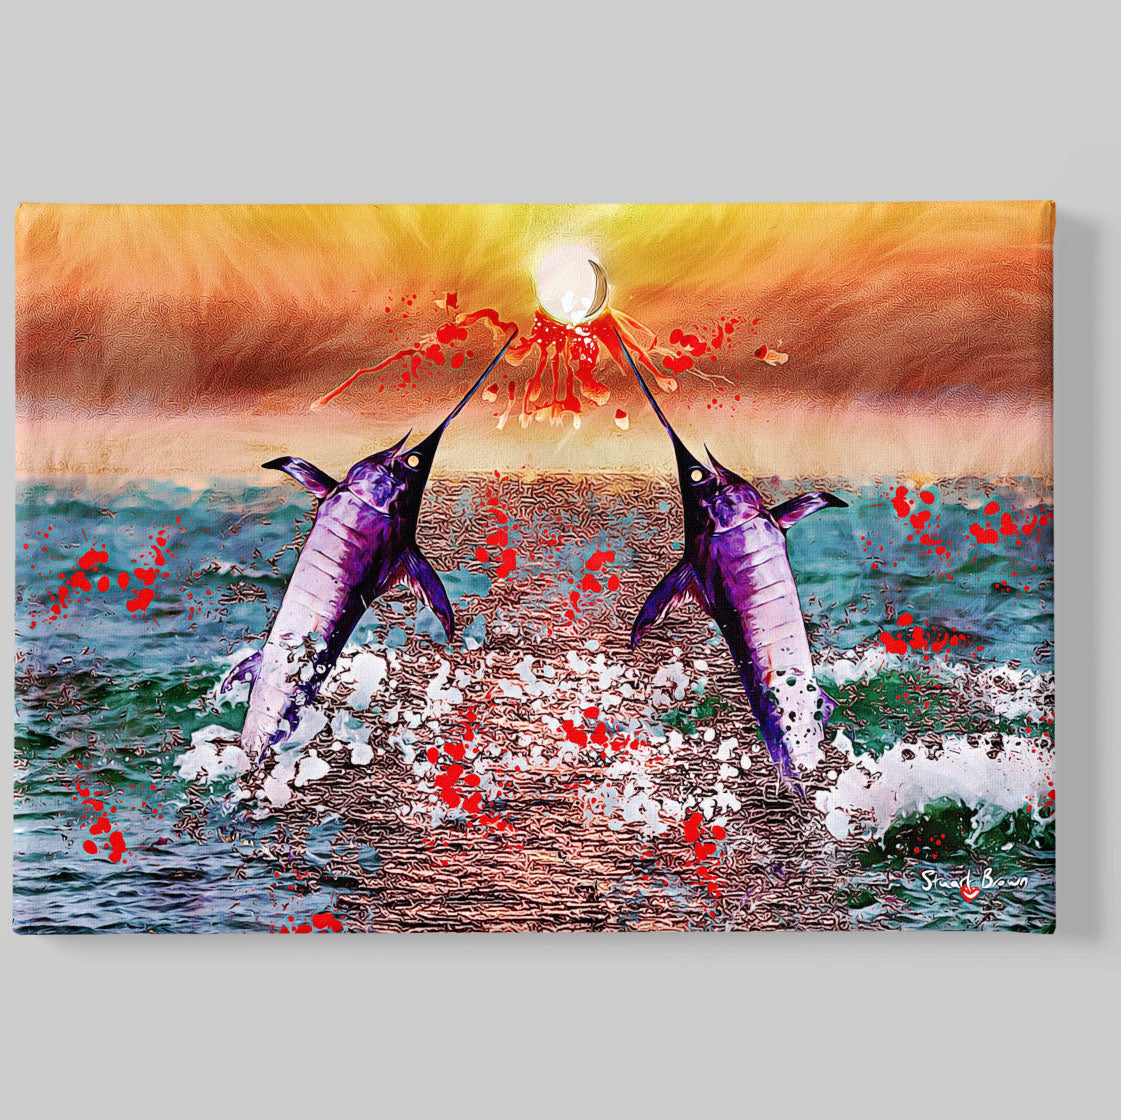 two swordfish rise to pierce the sun wall art print